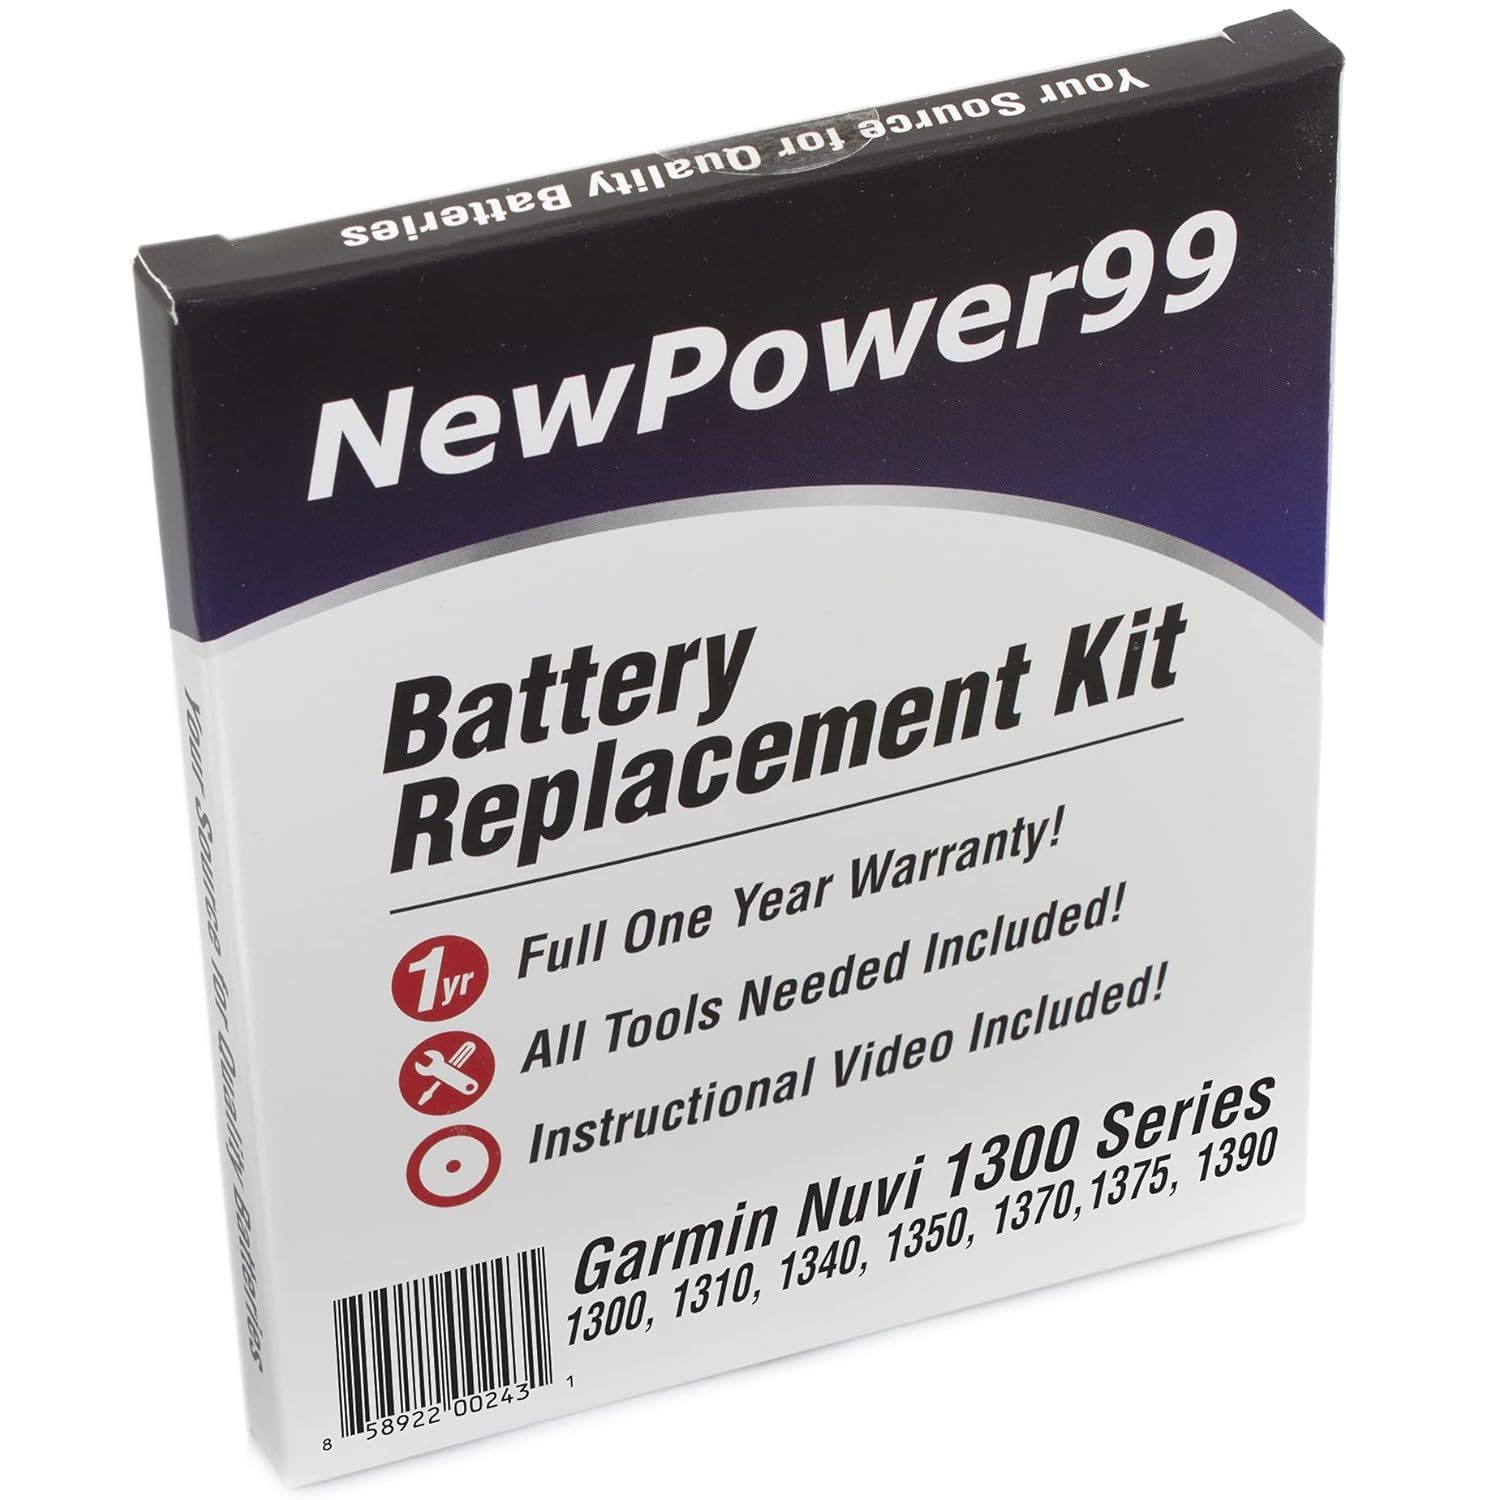 Newpower99 Battery Kit For Garmin Series - 1300, 1350, 1370, 1375, 1390, 1340, 1 - $62.99